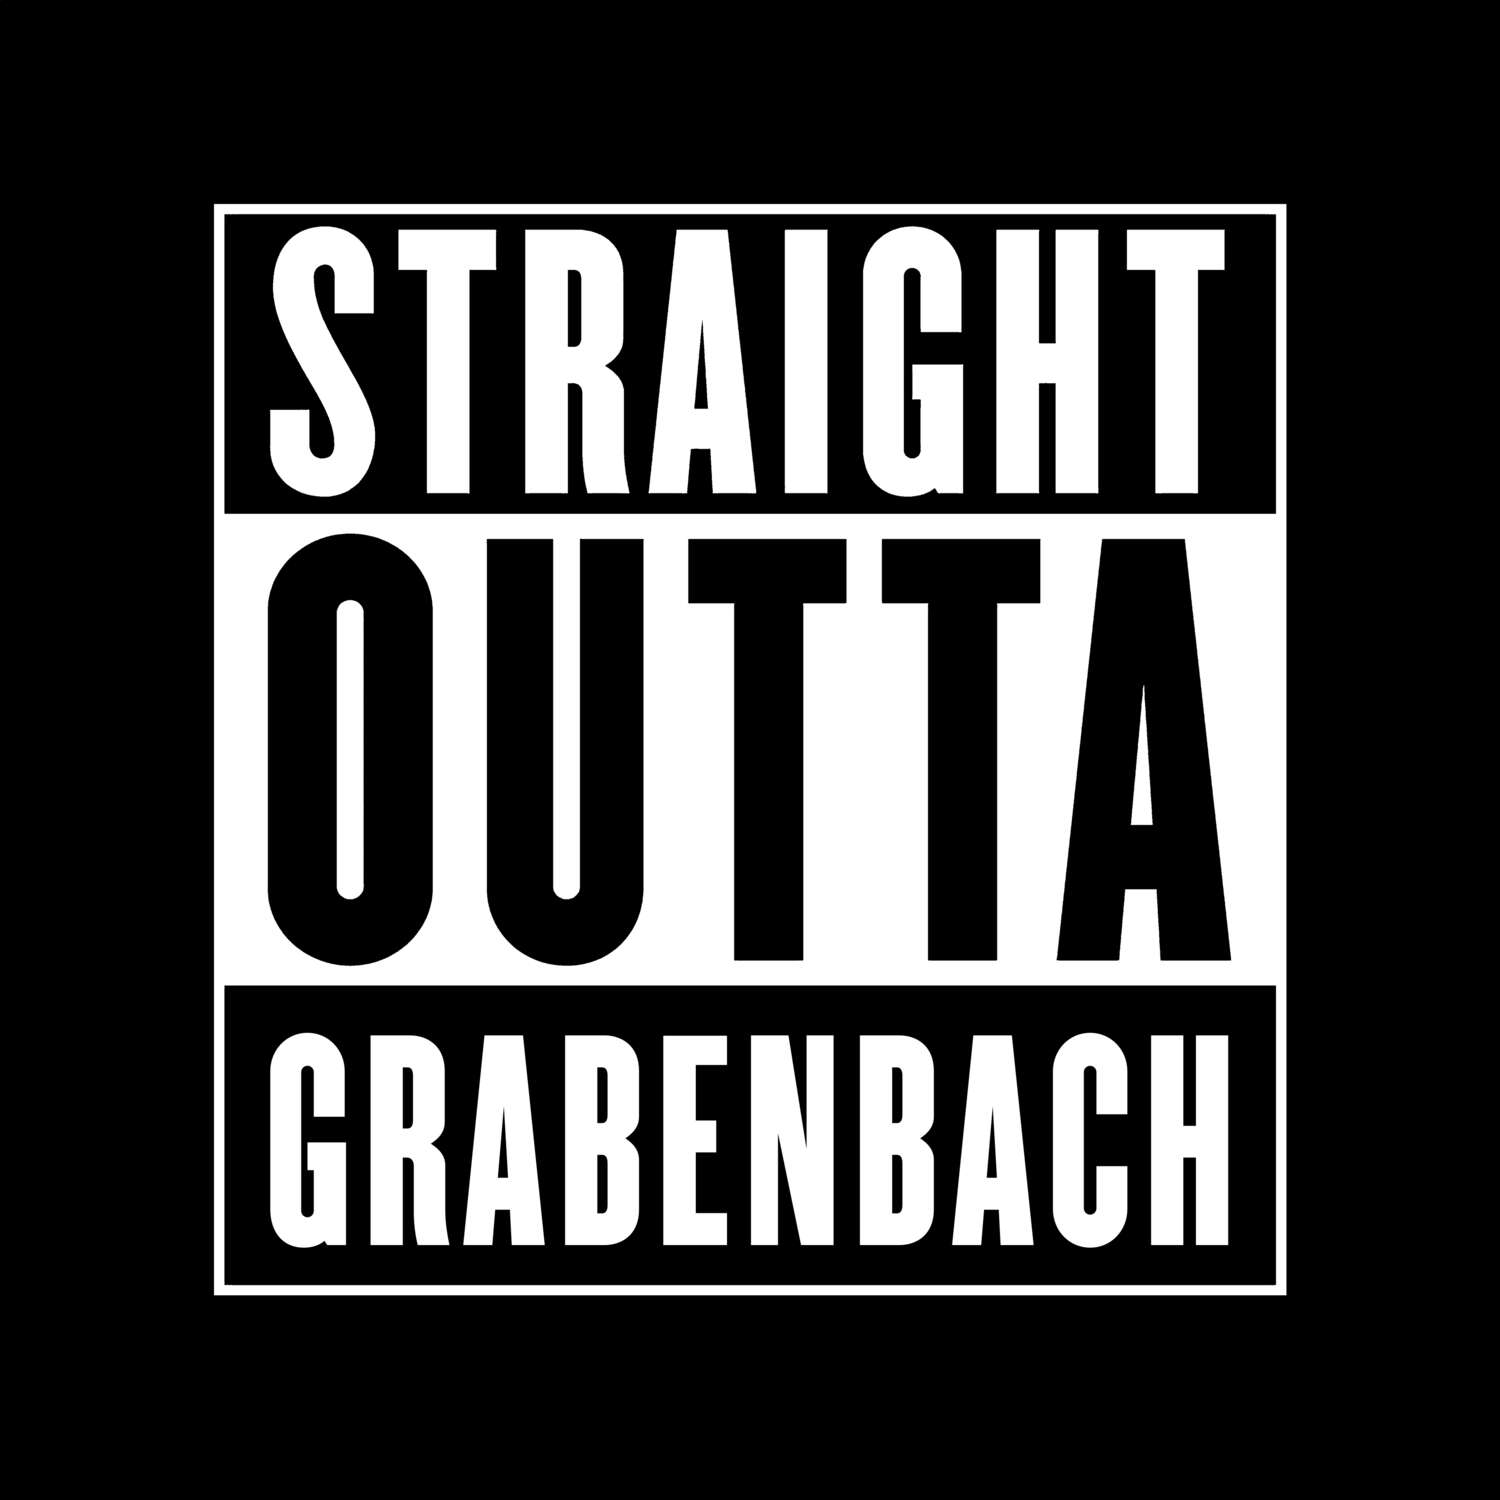 Grabenbach T-Shirt »Straight Outta«